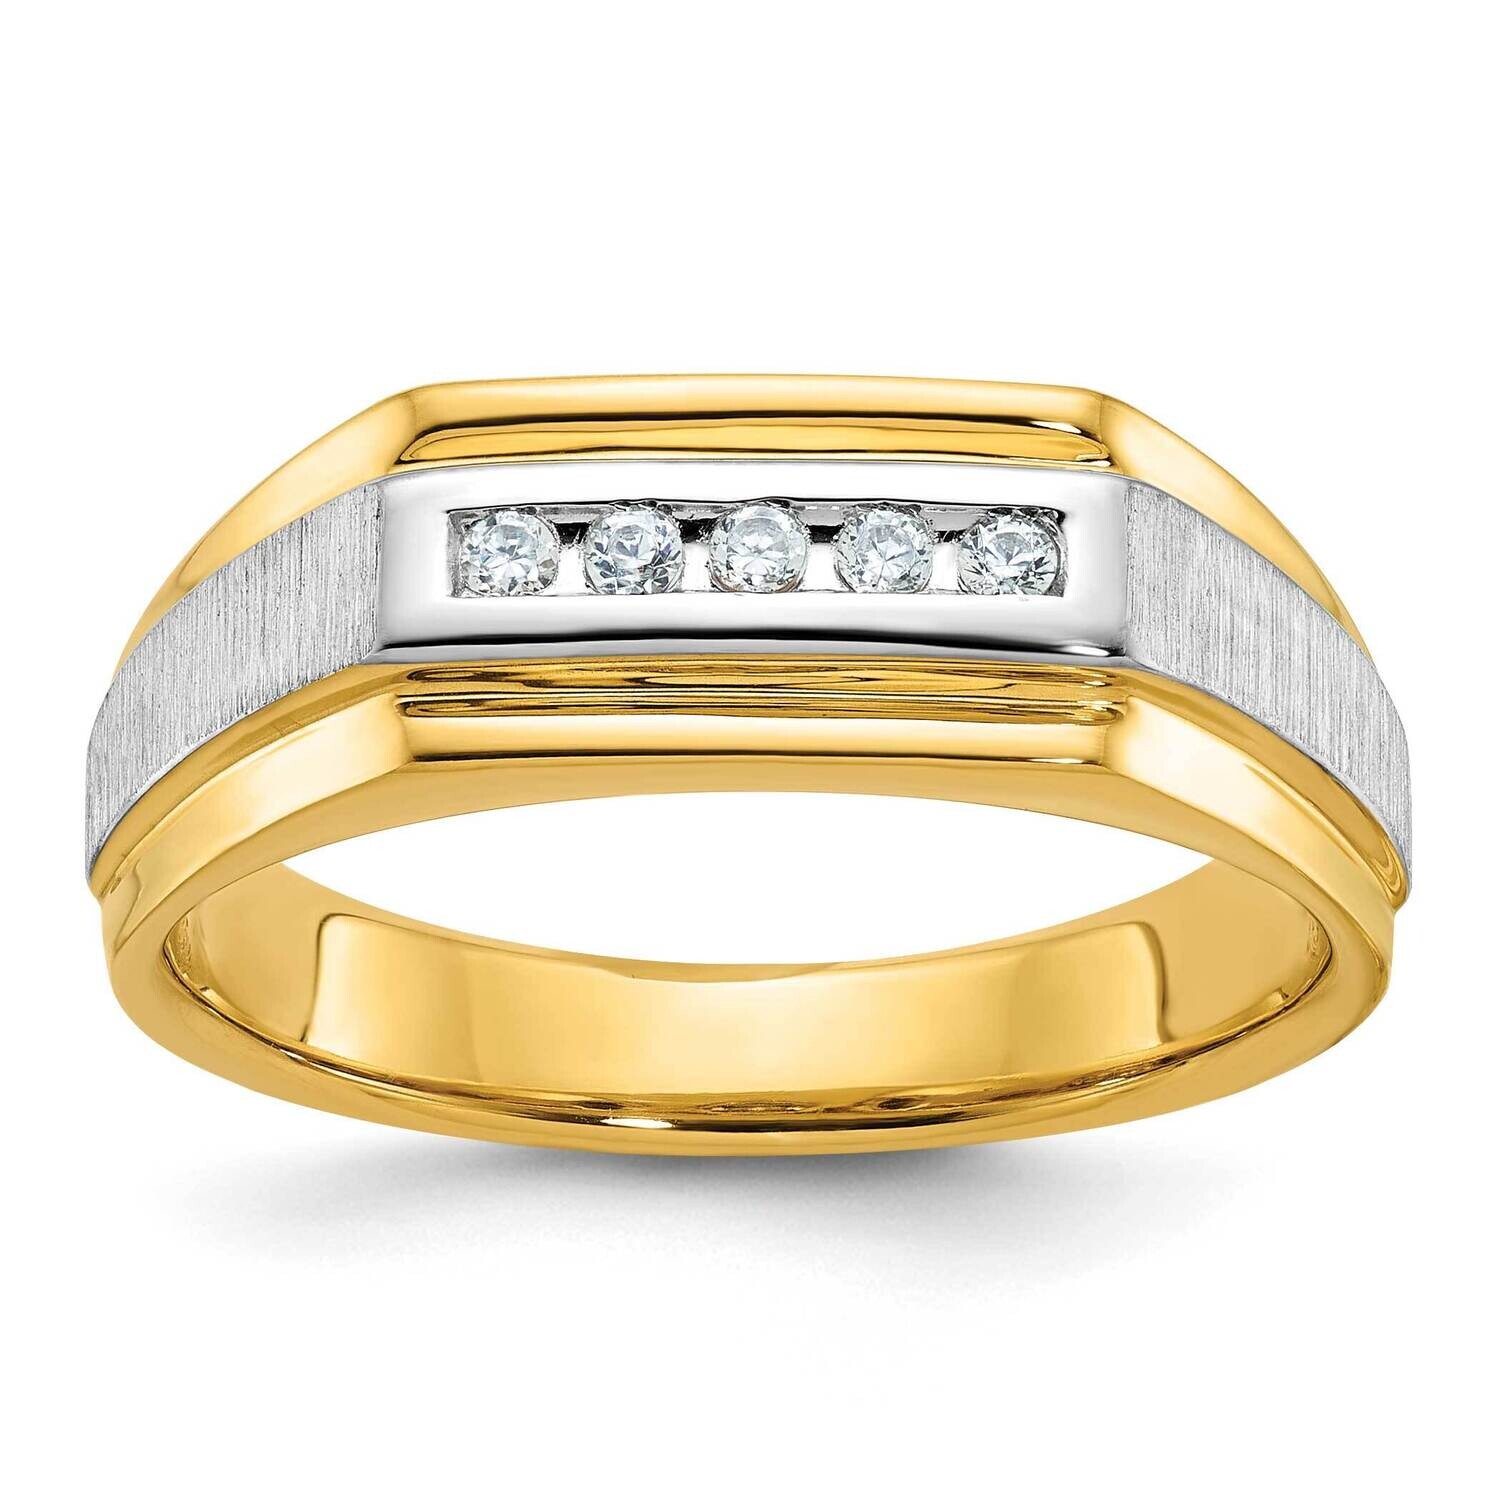 Ibgoodman Men's Polished Satin 5-Stone 1/10 Carat Aa Quality Diamond Ring 14k Gold White Rhodium B63235-4YWAA